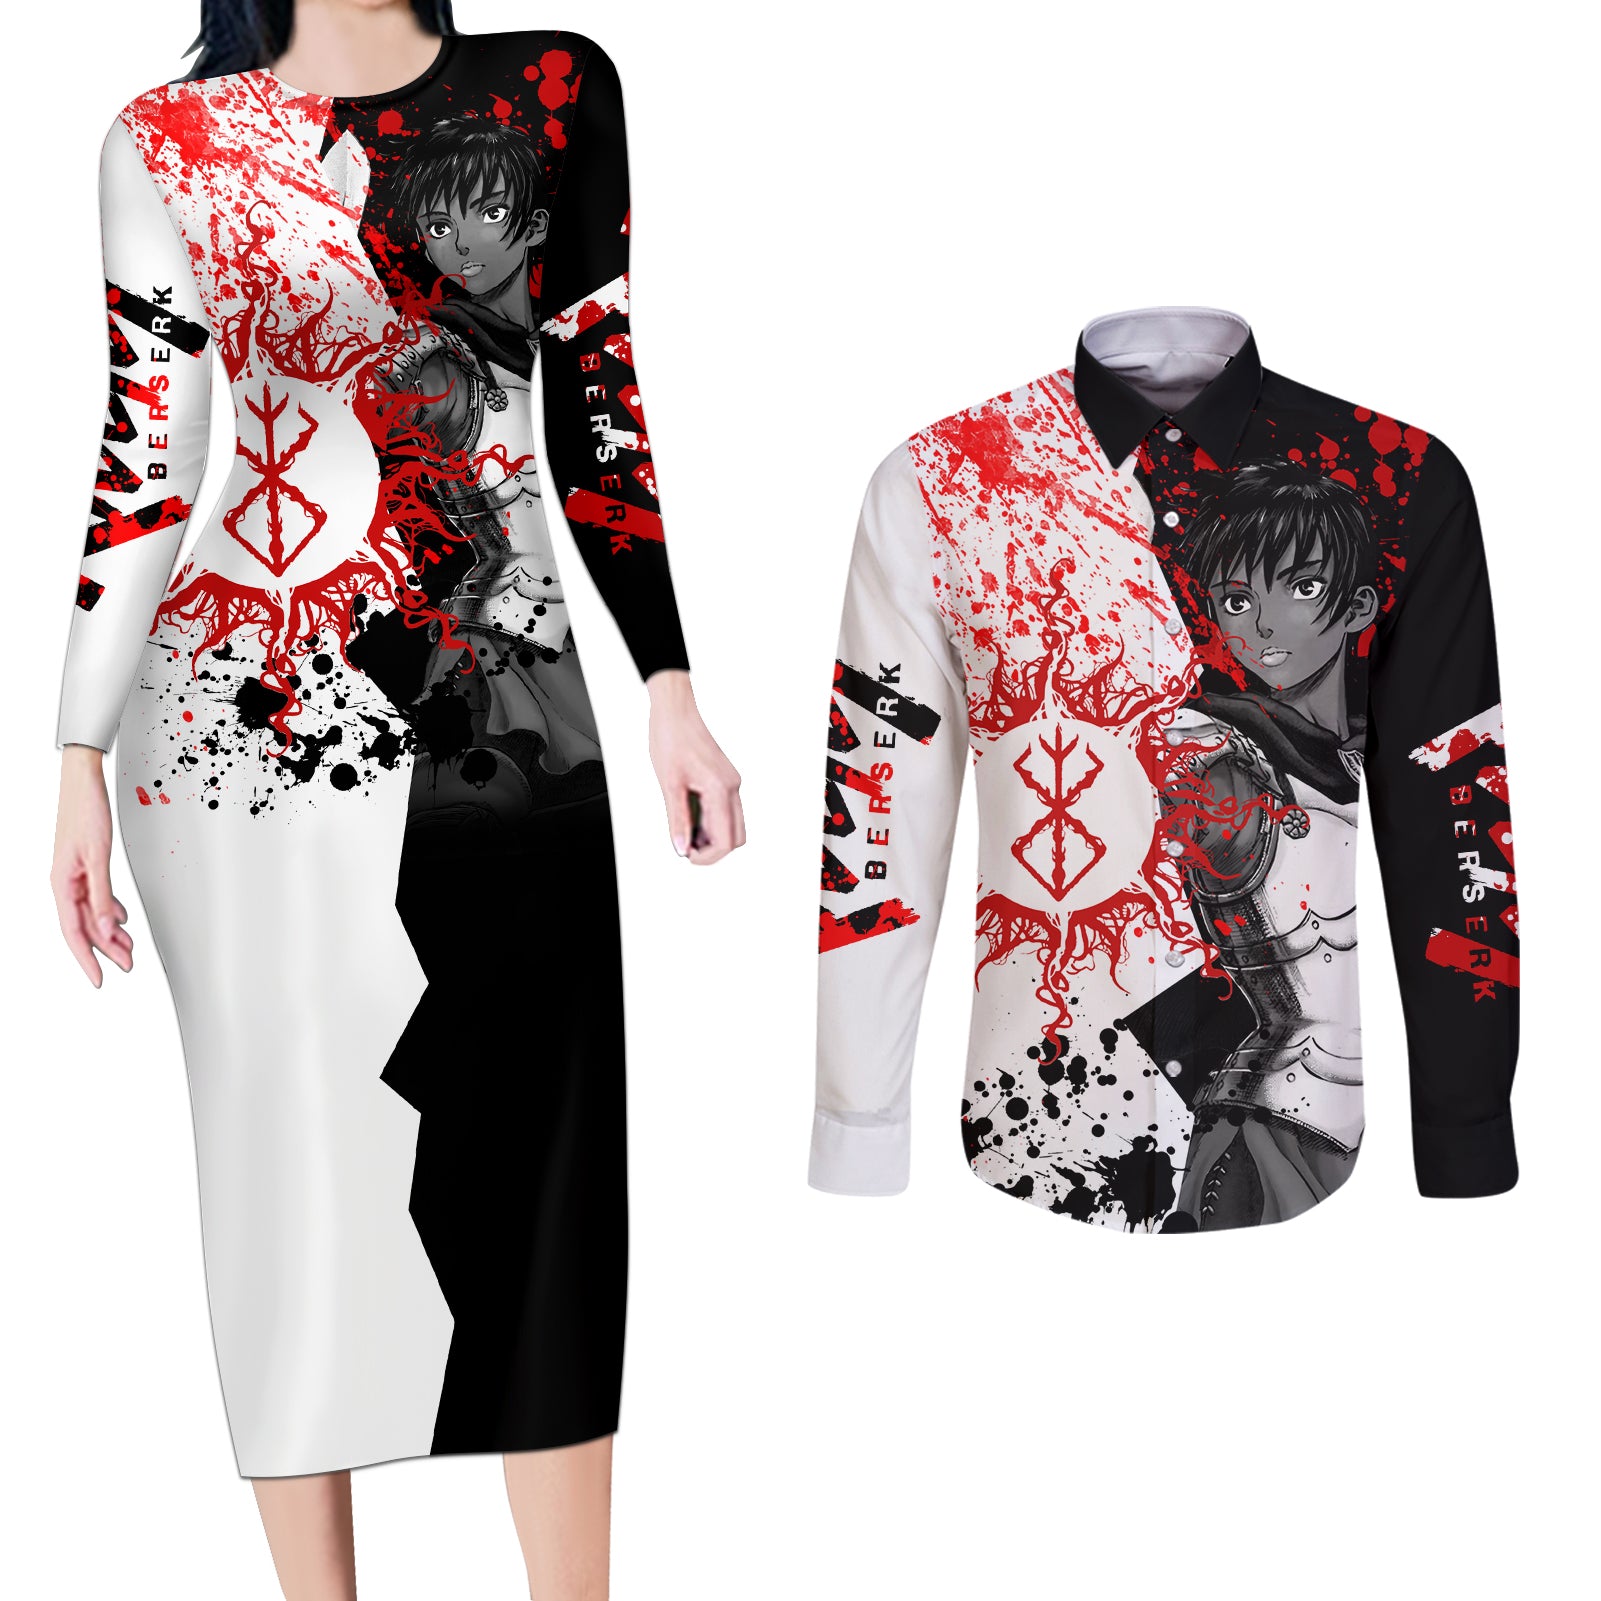 Casca Berserk Couples Matching Long Sleeve Bodycon Dress and Long Sleeve Button Shirt Grunge Blood Style